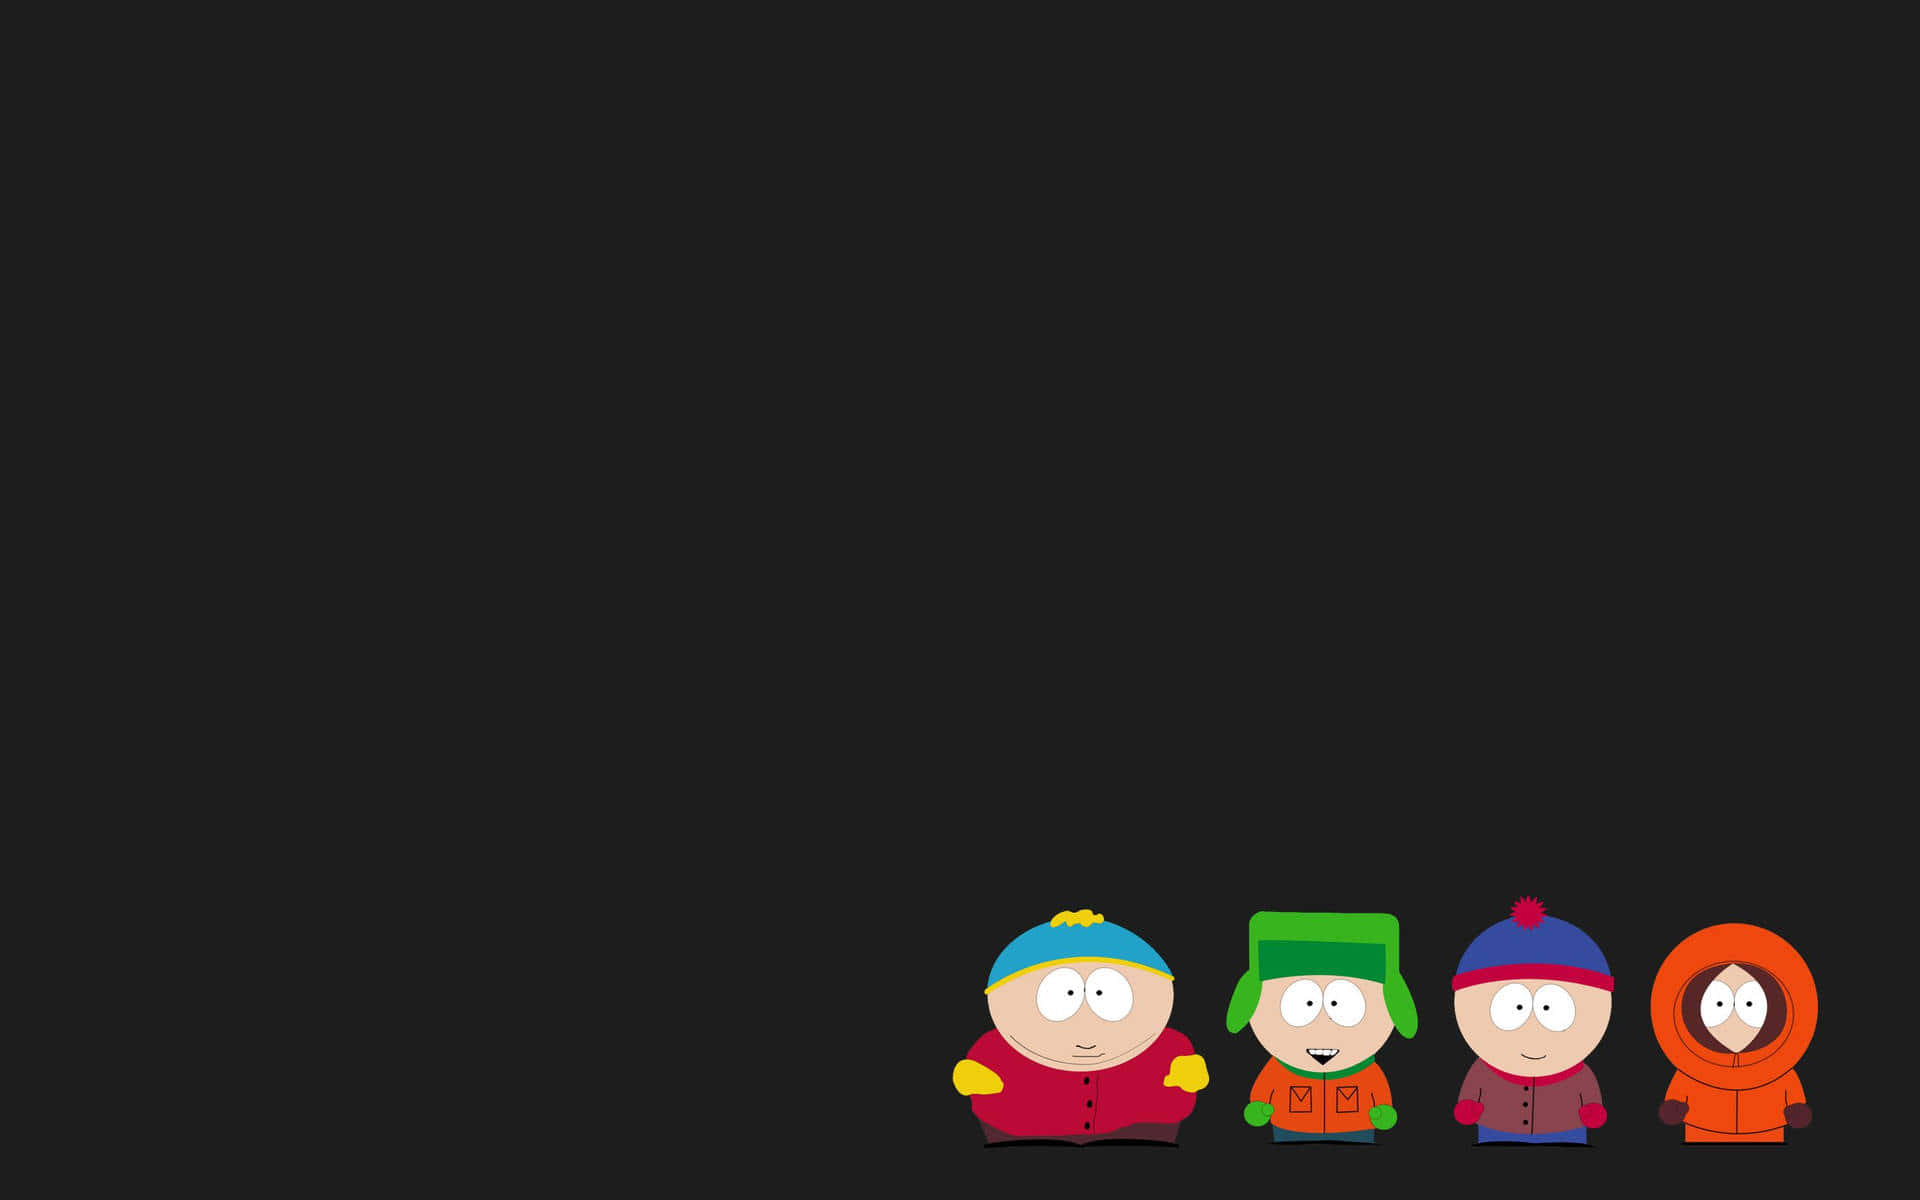 Alledeine Lieblingscharaktere Aus South Park An Einem Ort!